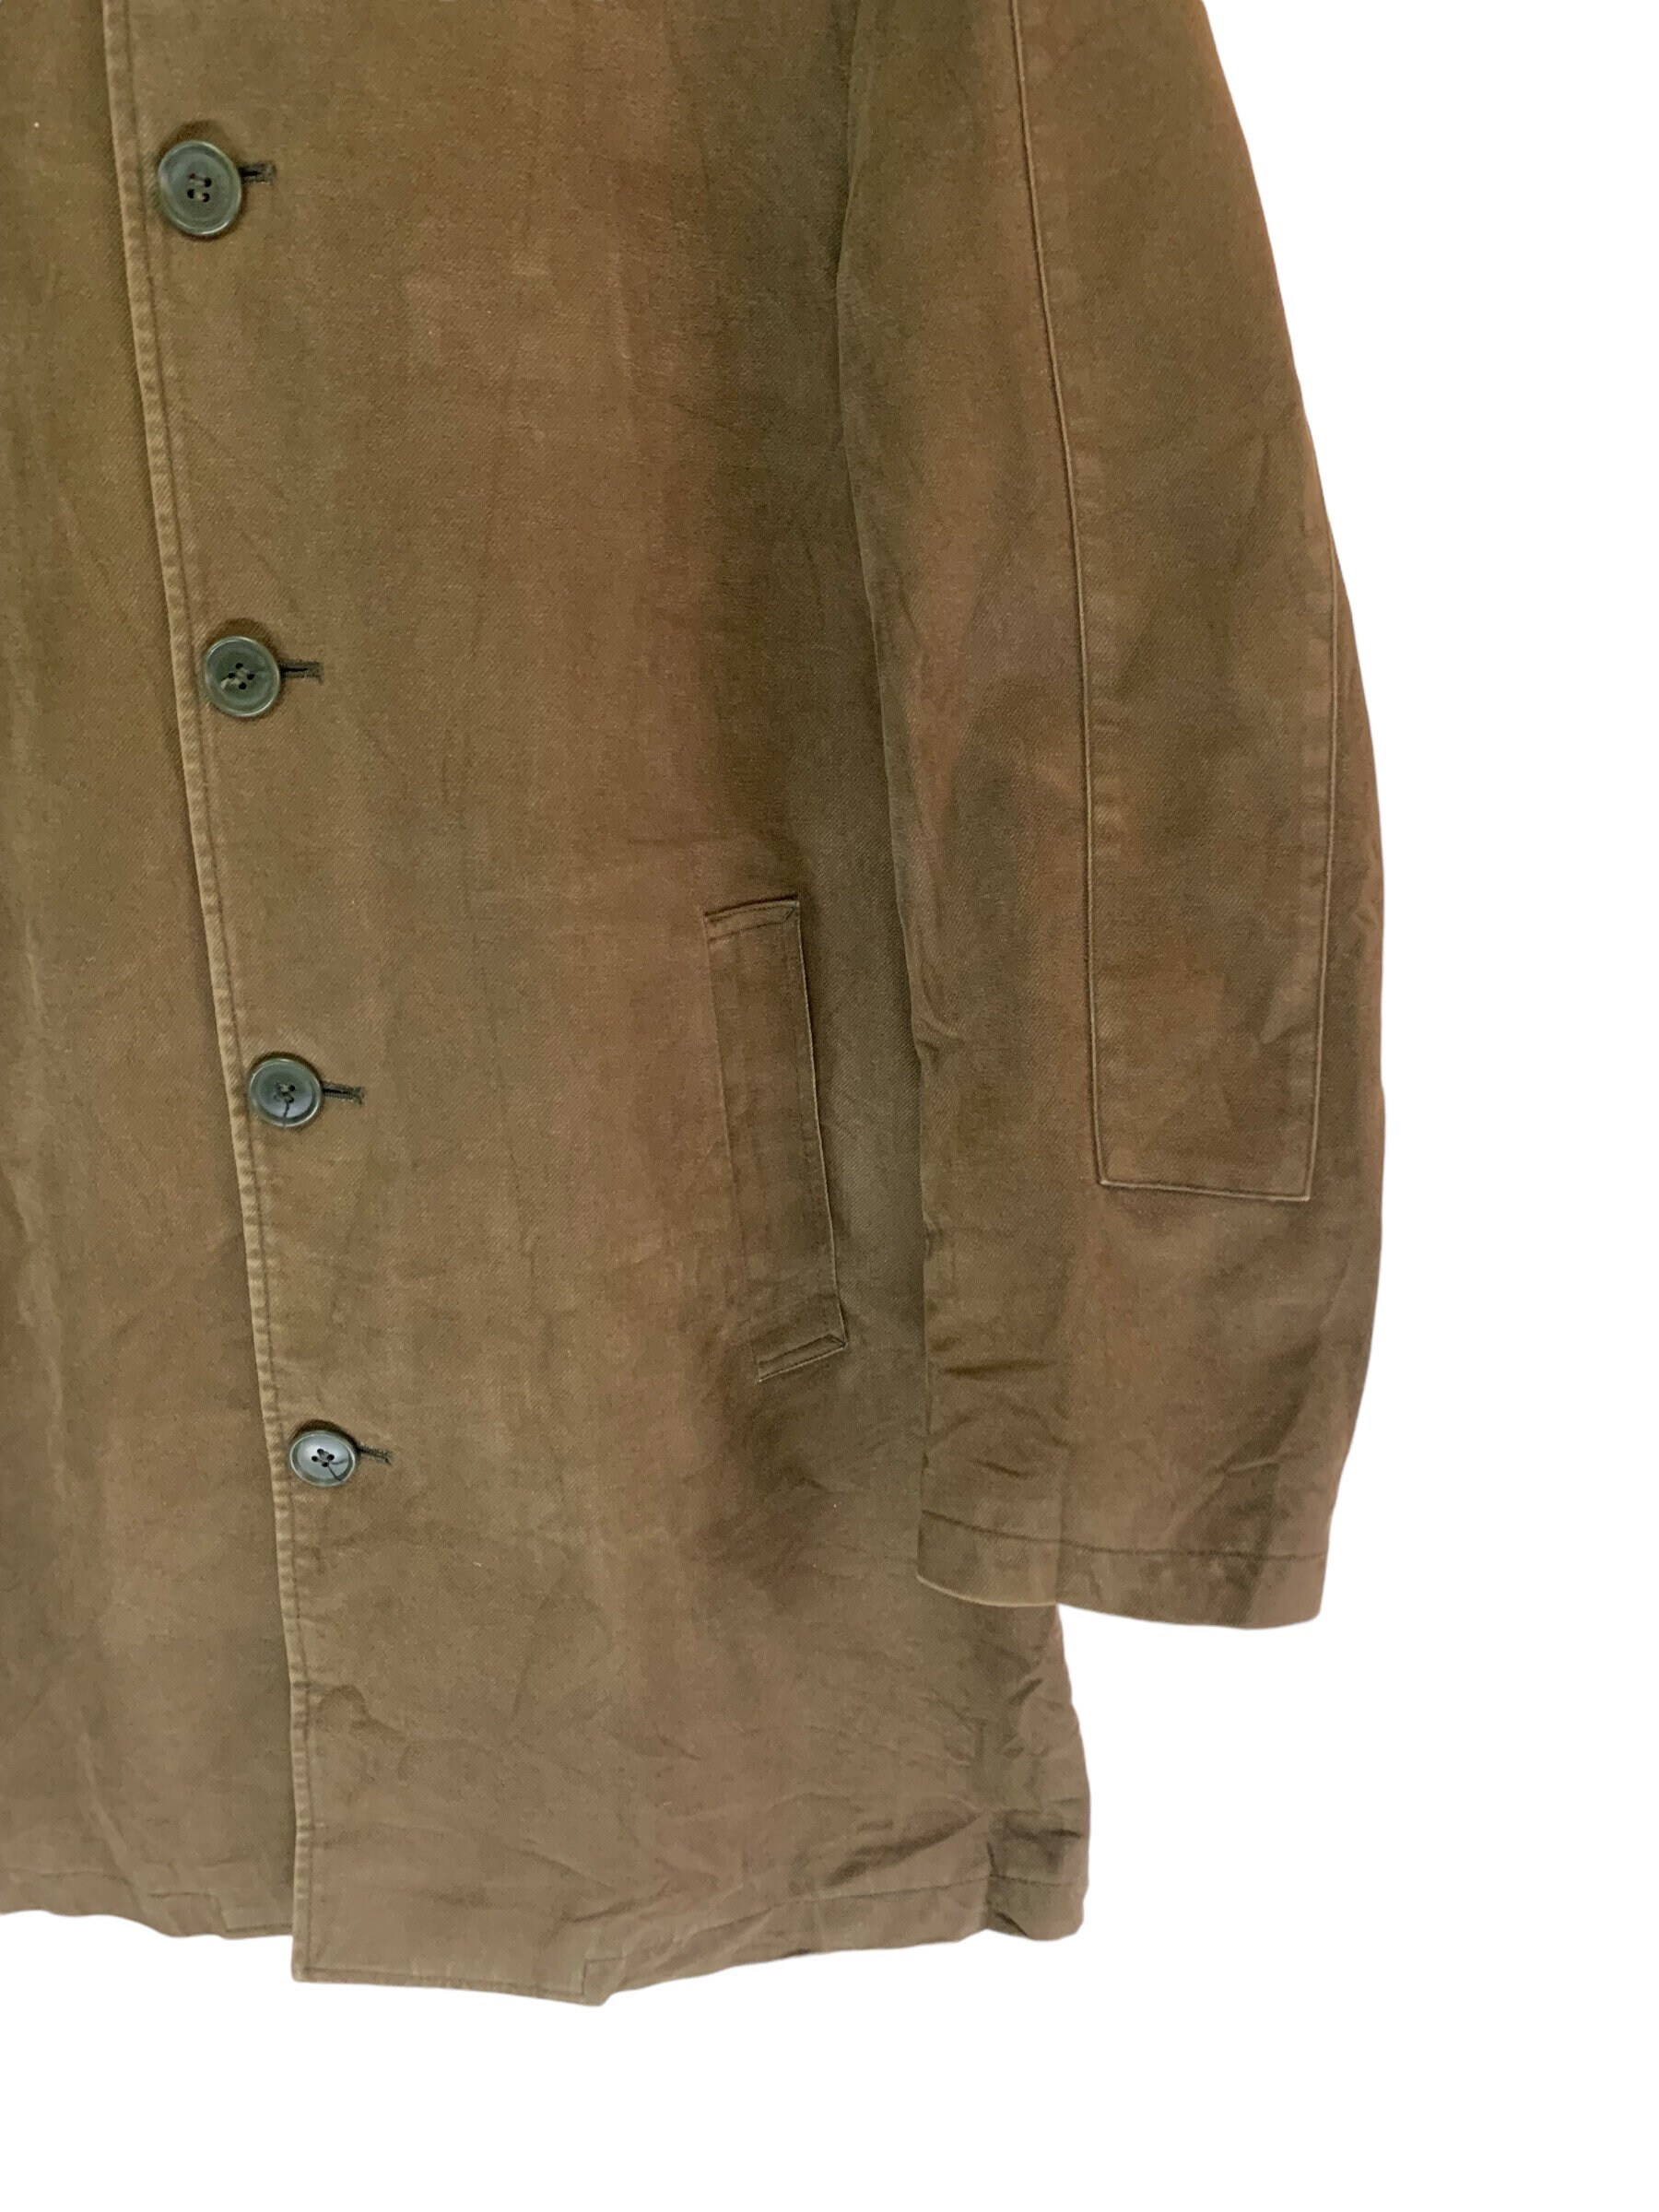 Vintage Hamnett Coat Rare Design Military Style Medium Size - Etsy